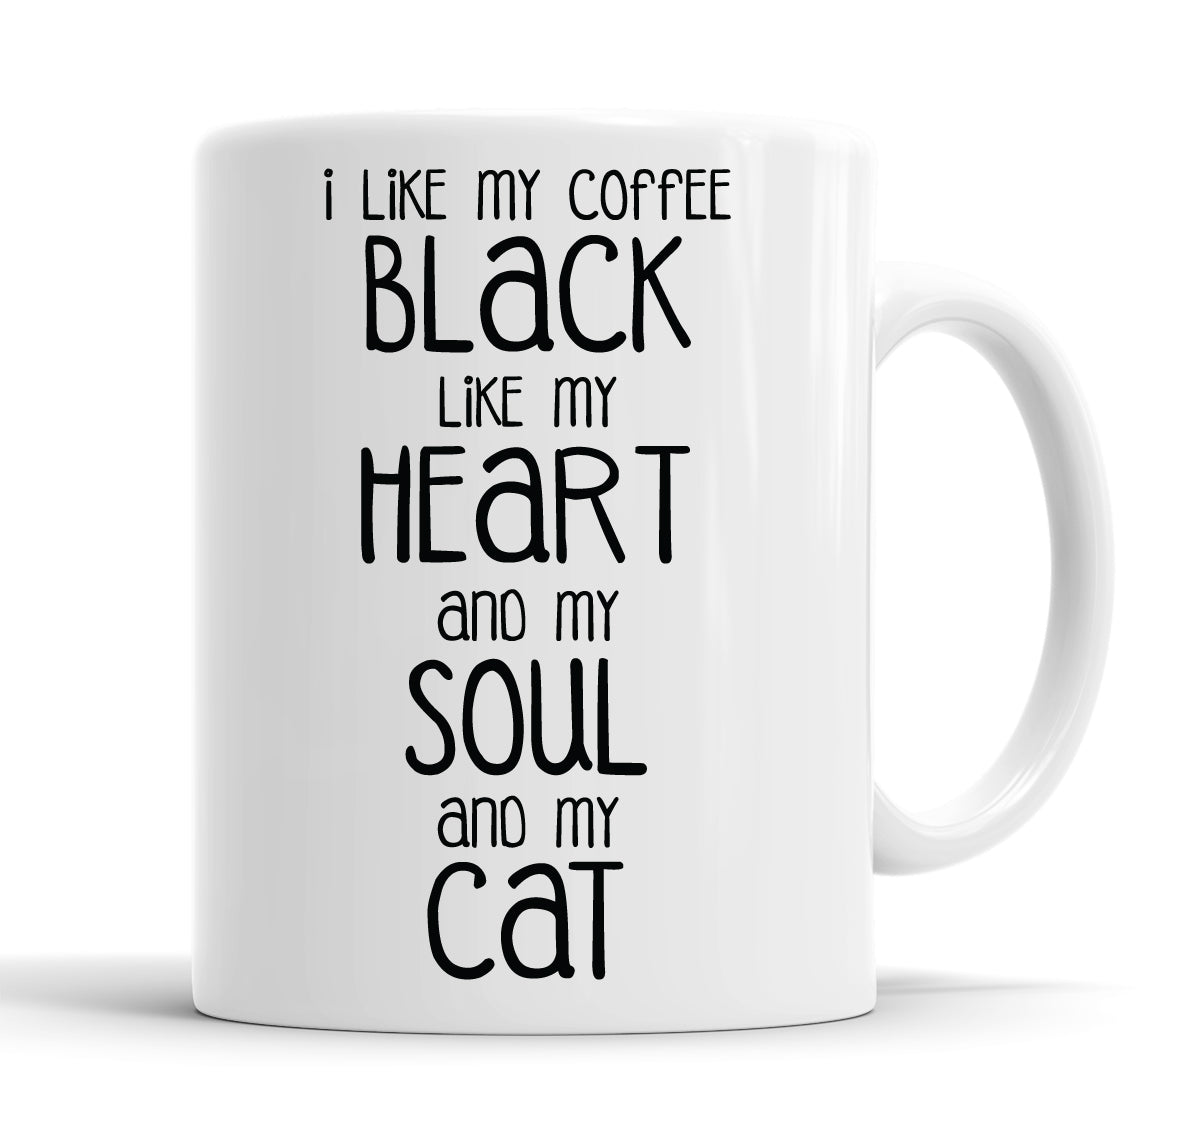 I Like My Coffee Black Like My Heart And My Soul And My Cat Funny Slogan Mug Tea Cup Coffee